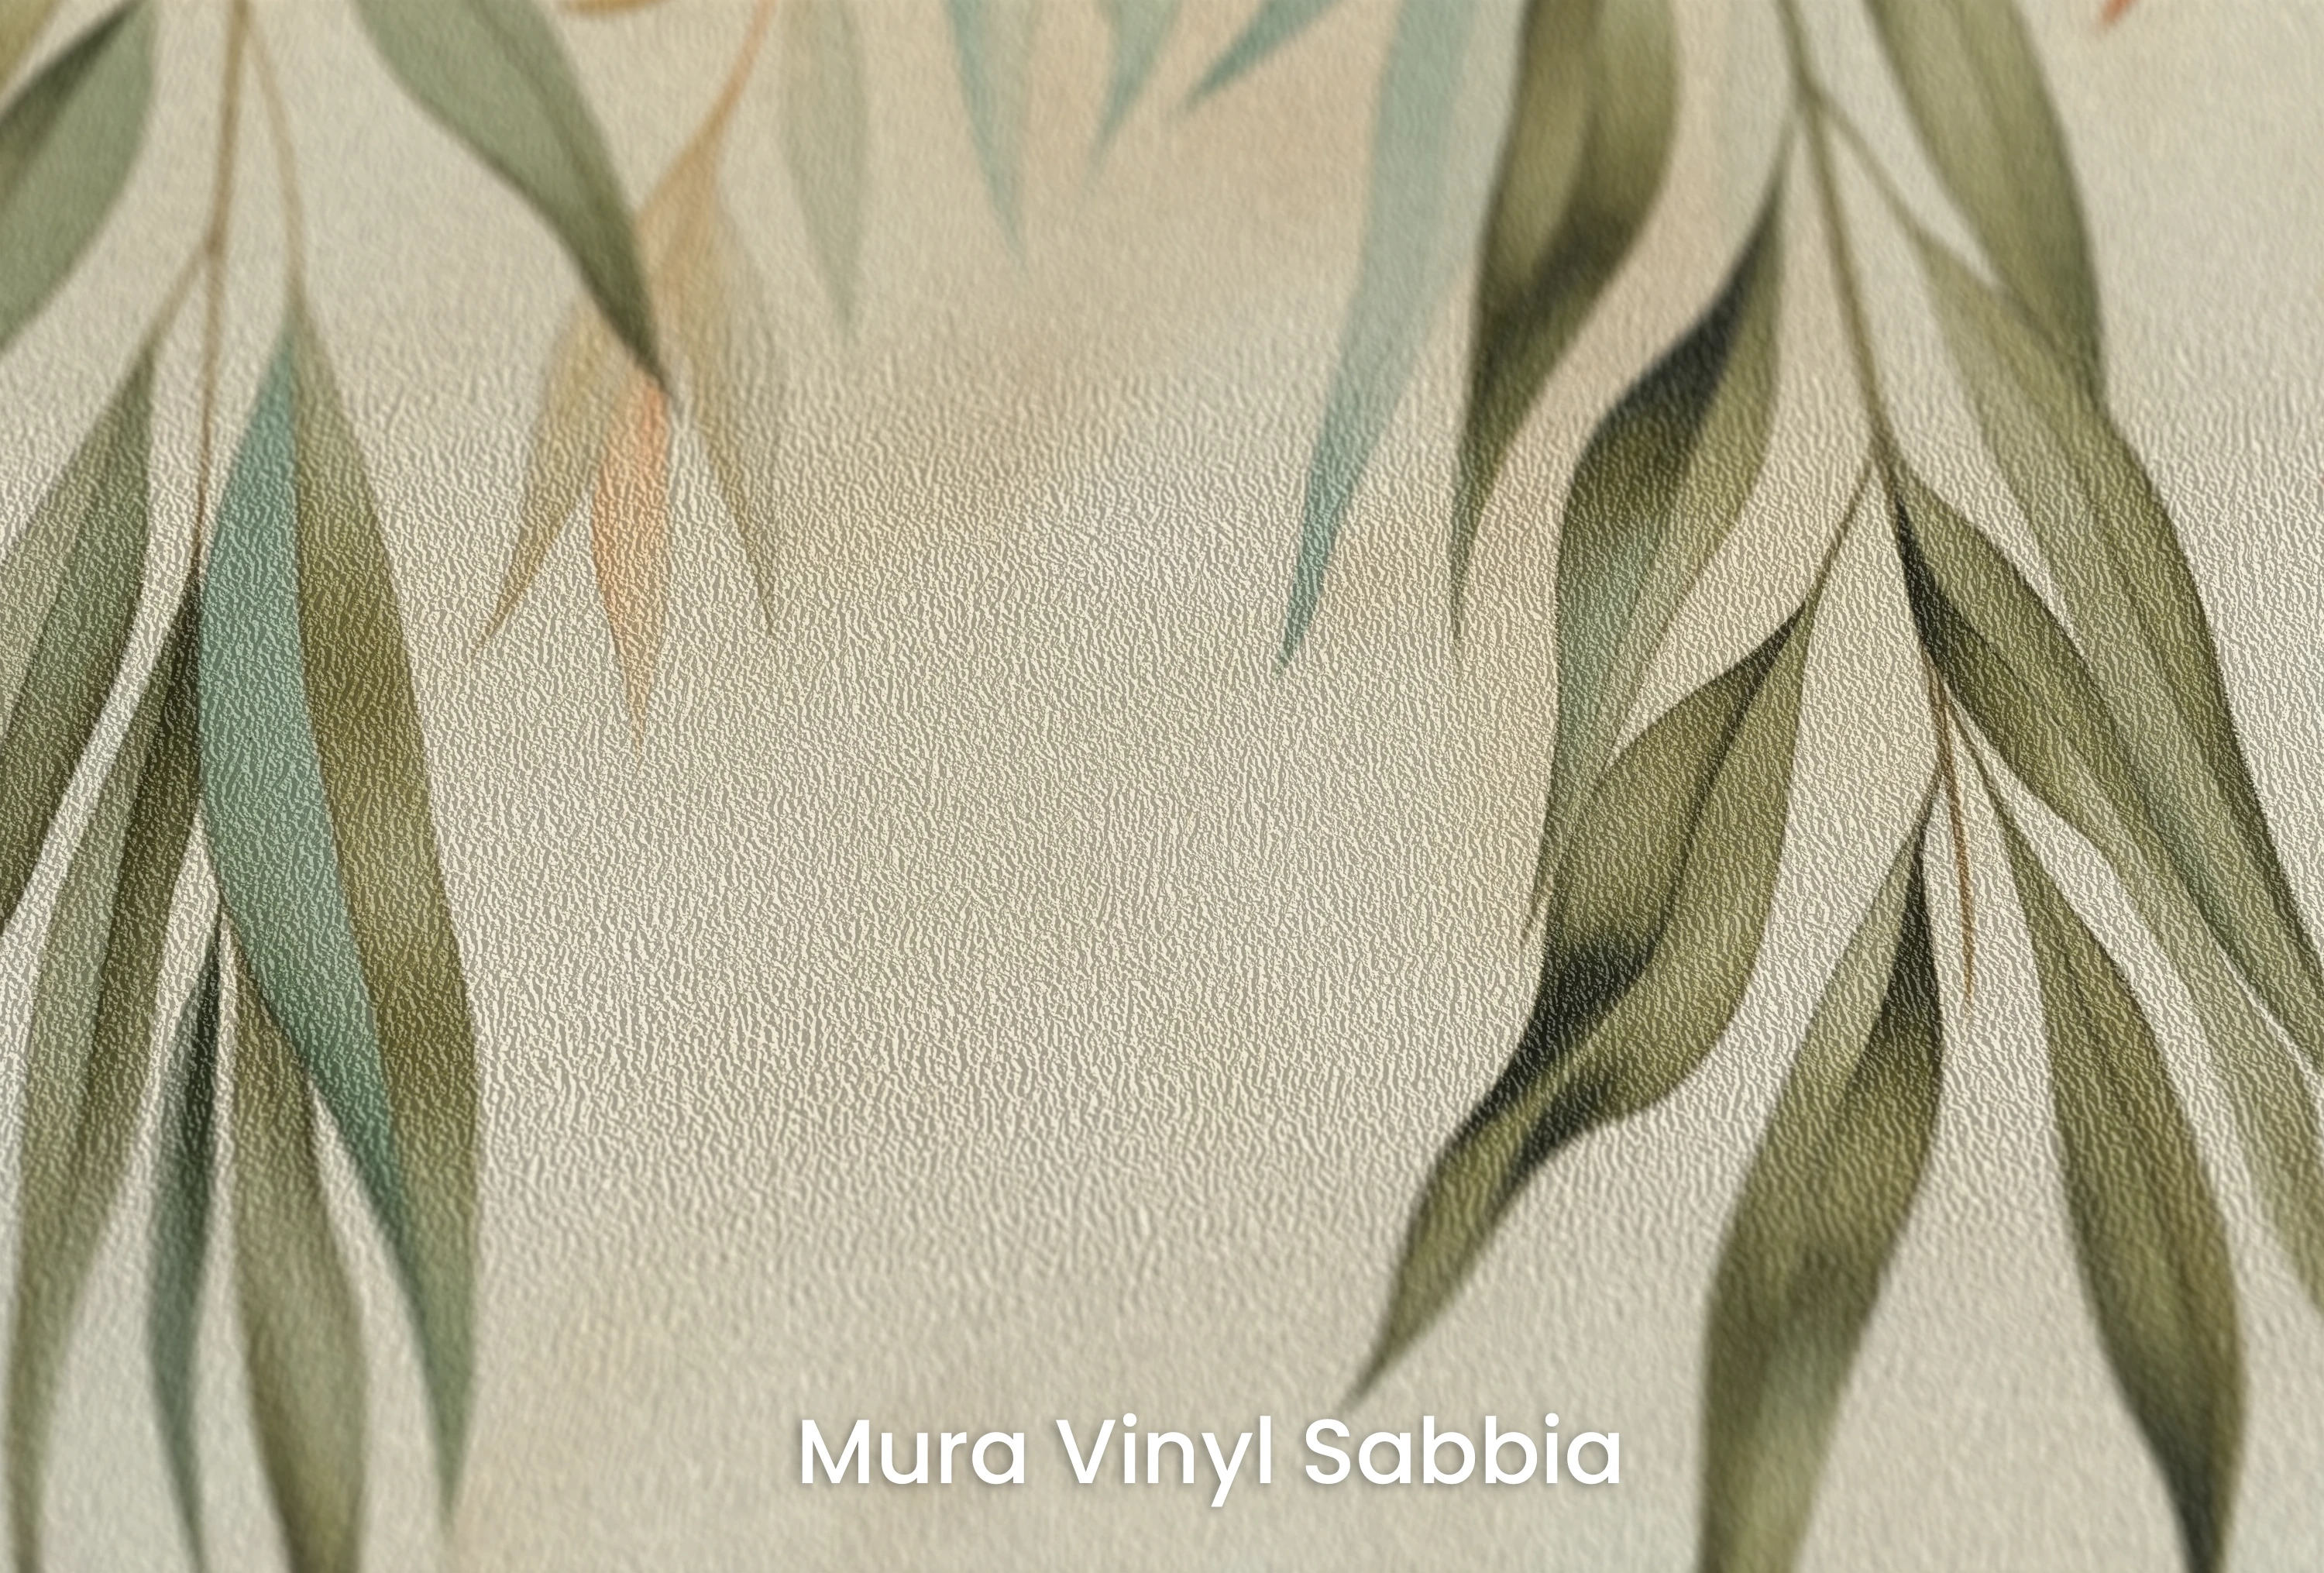 Fototapetenmuster gedruckt auf Trägermaterial „Mura Vinyl Sabbia“.